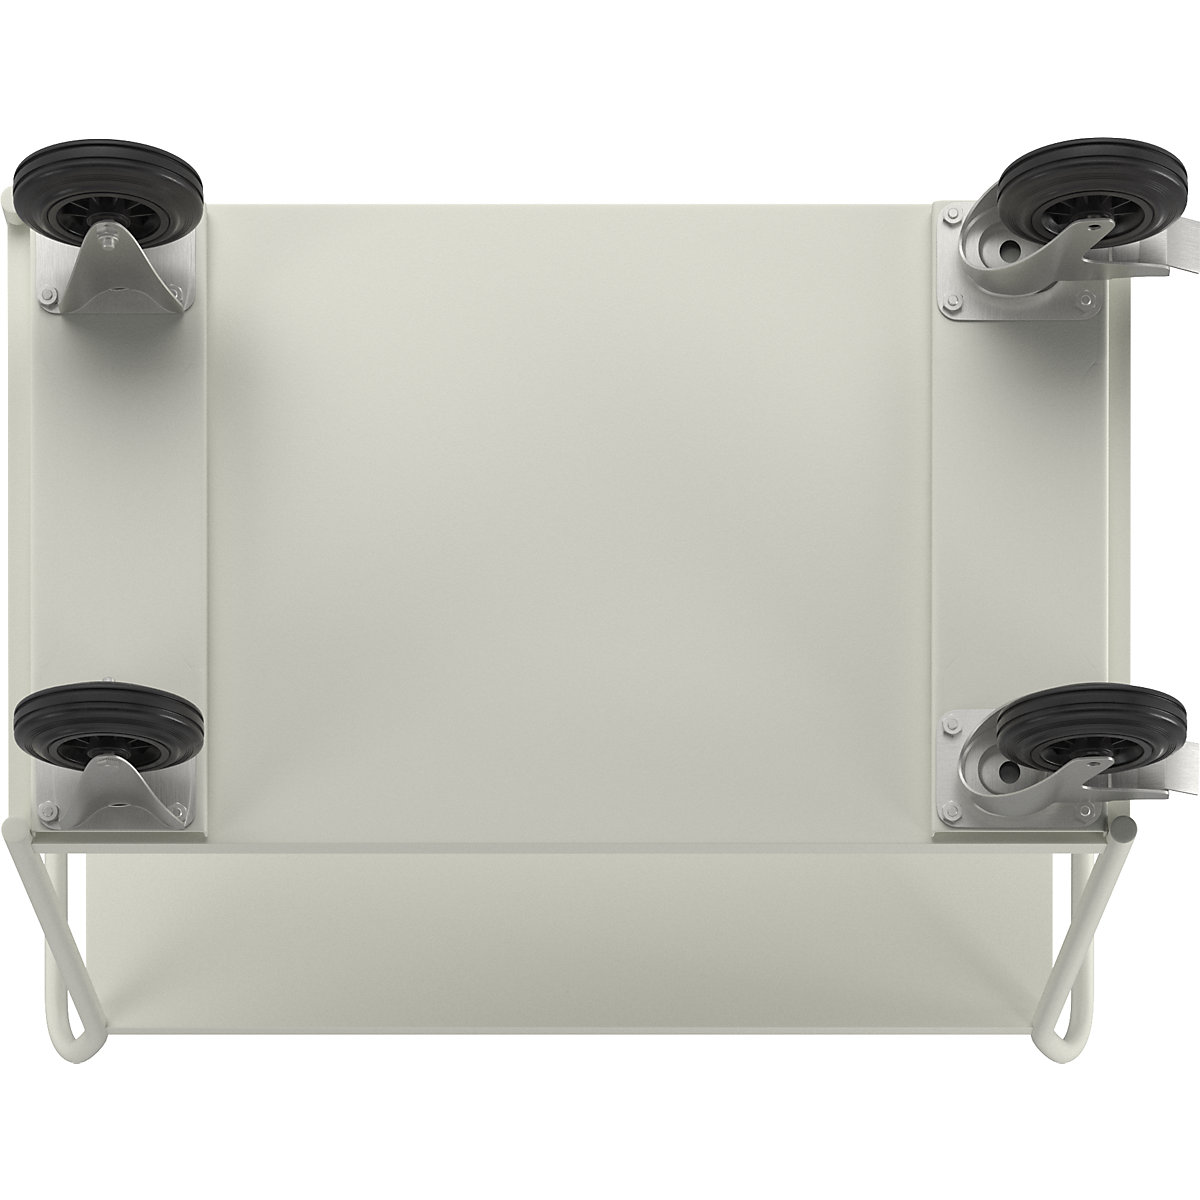 KM41 table trolley – Kongamek (Product illustration 37)-36